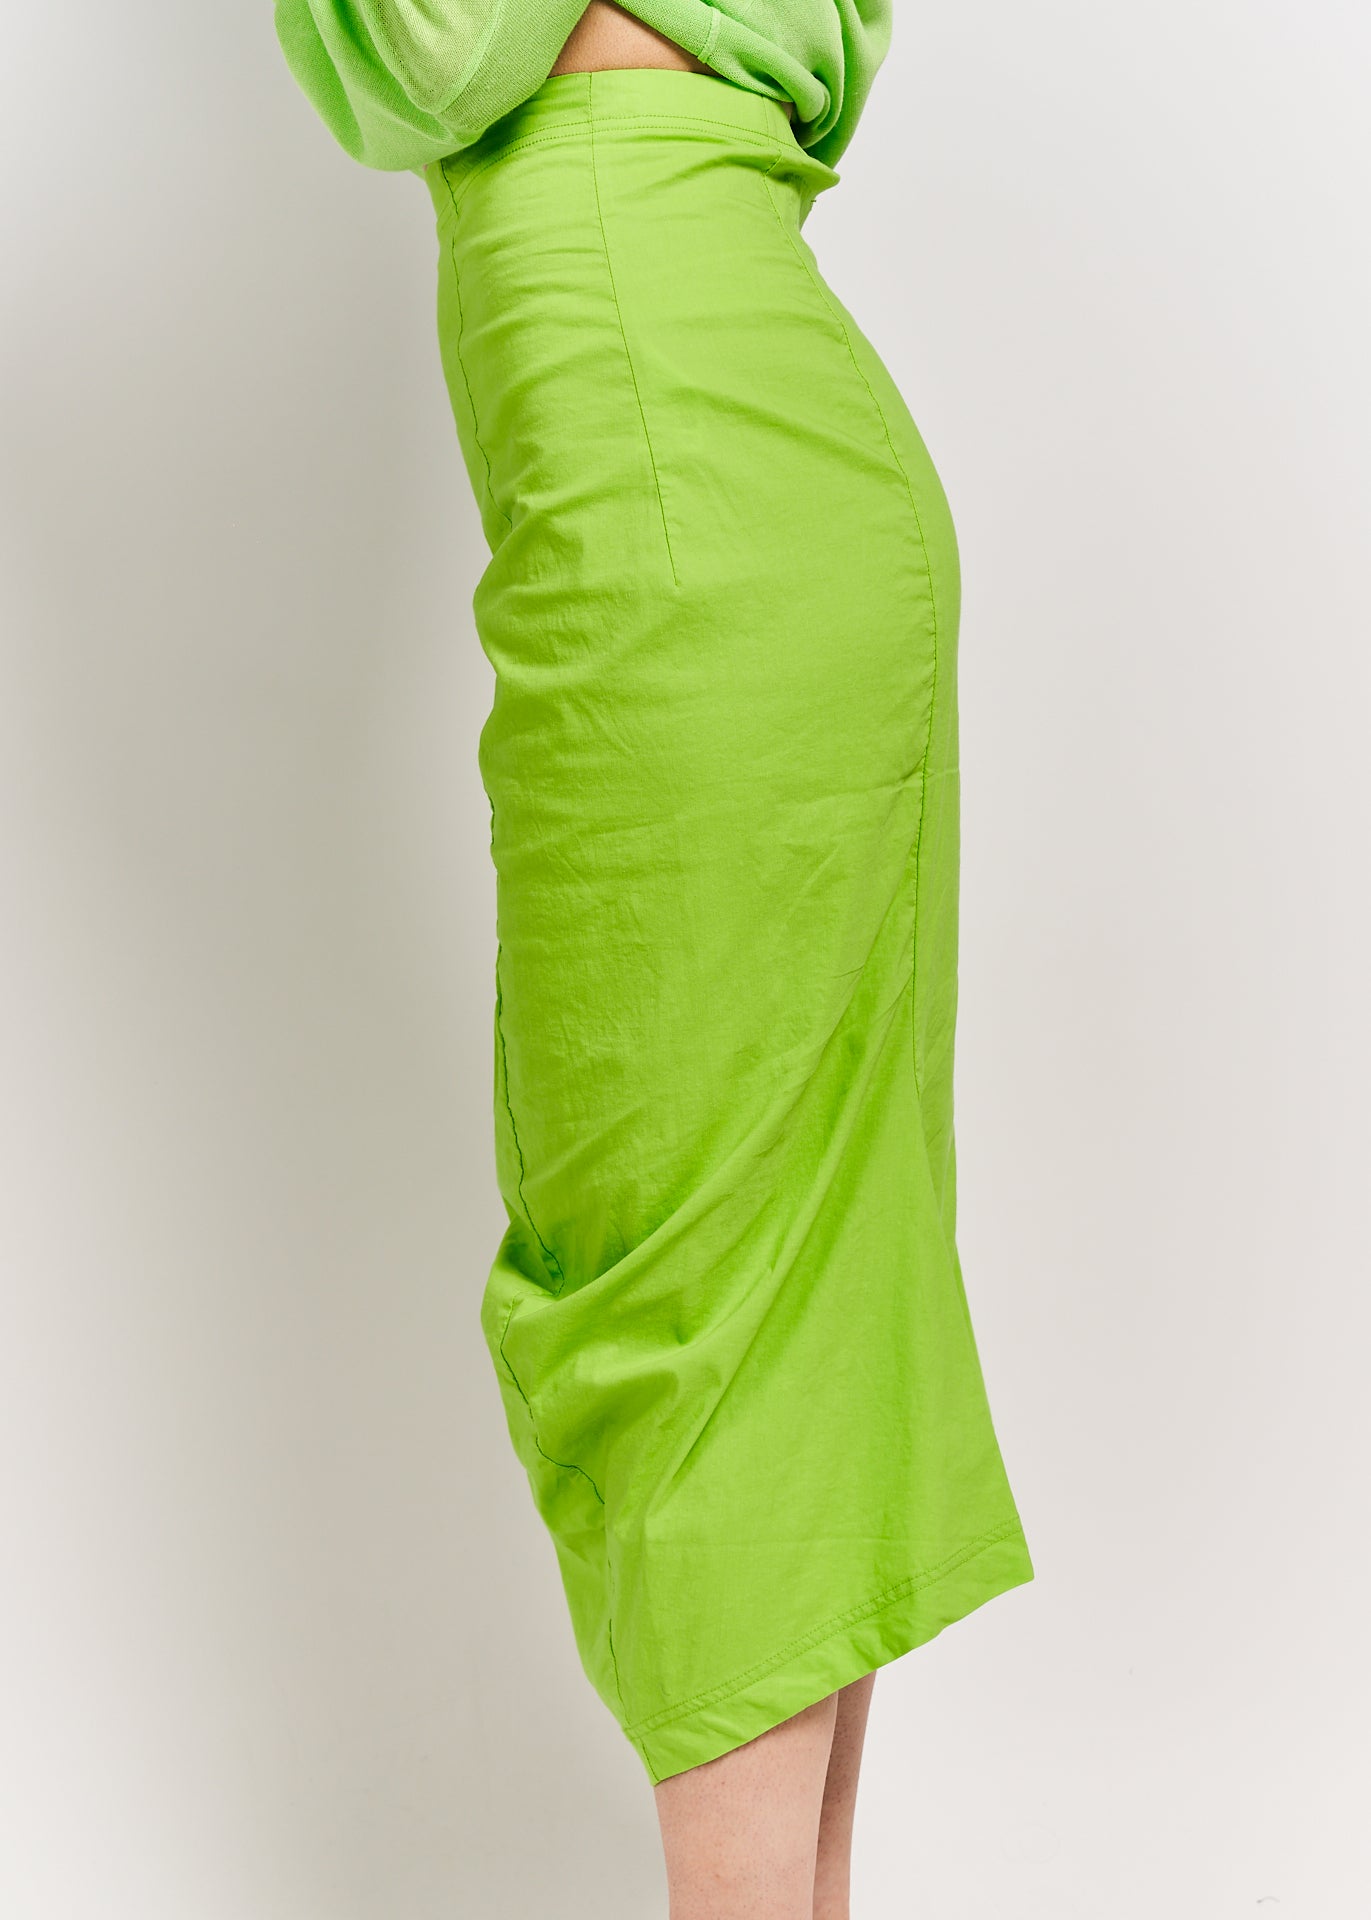 Rundholz Black Label Skirt Lime size Medium